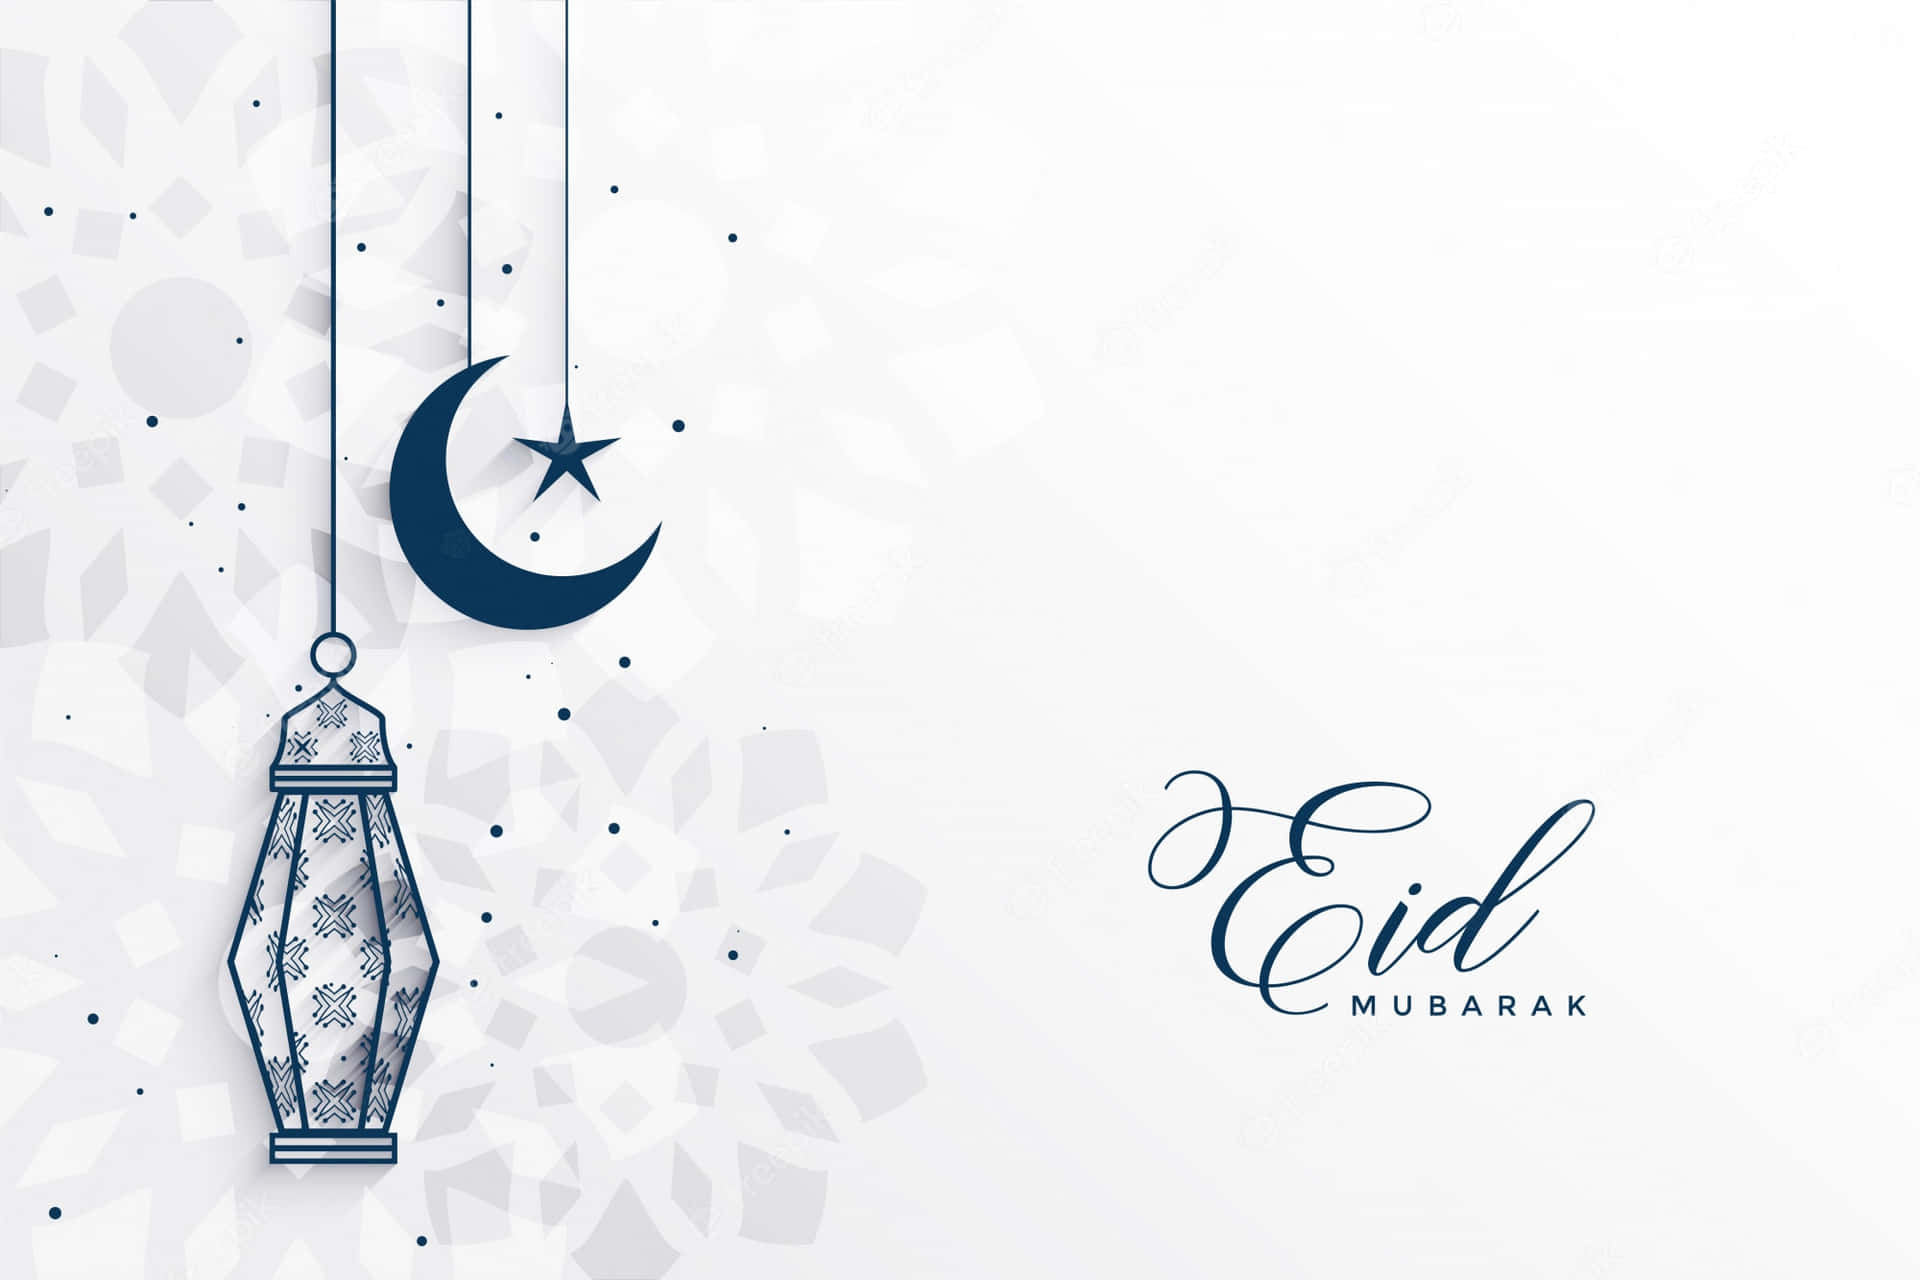 Eid Mubarak to All!